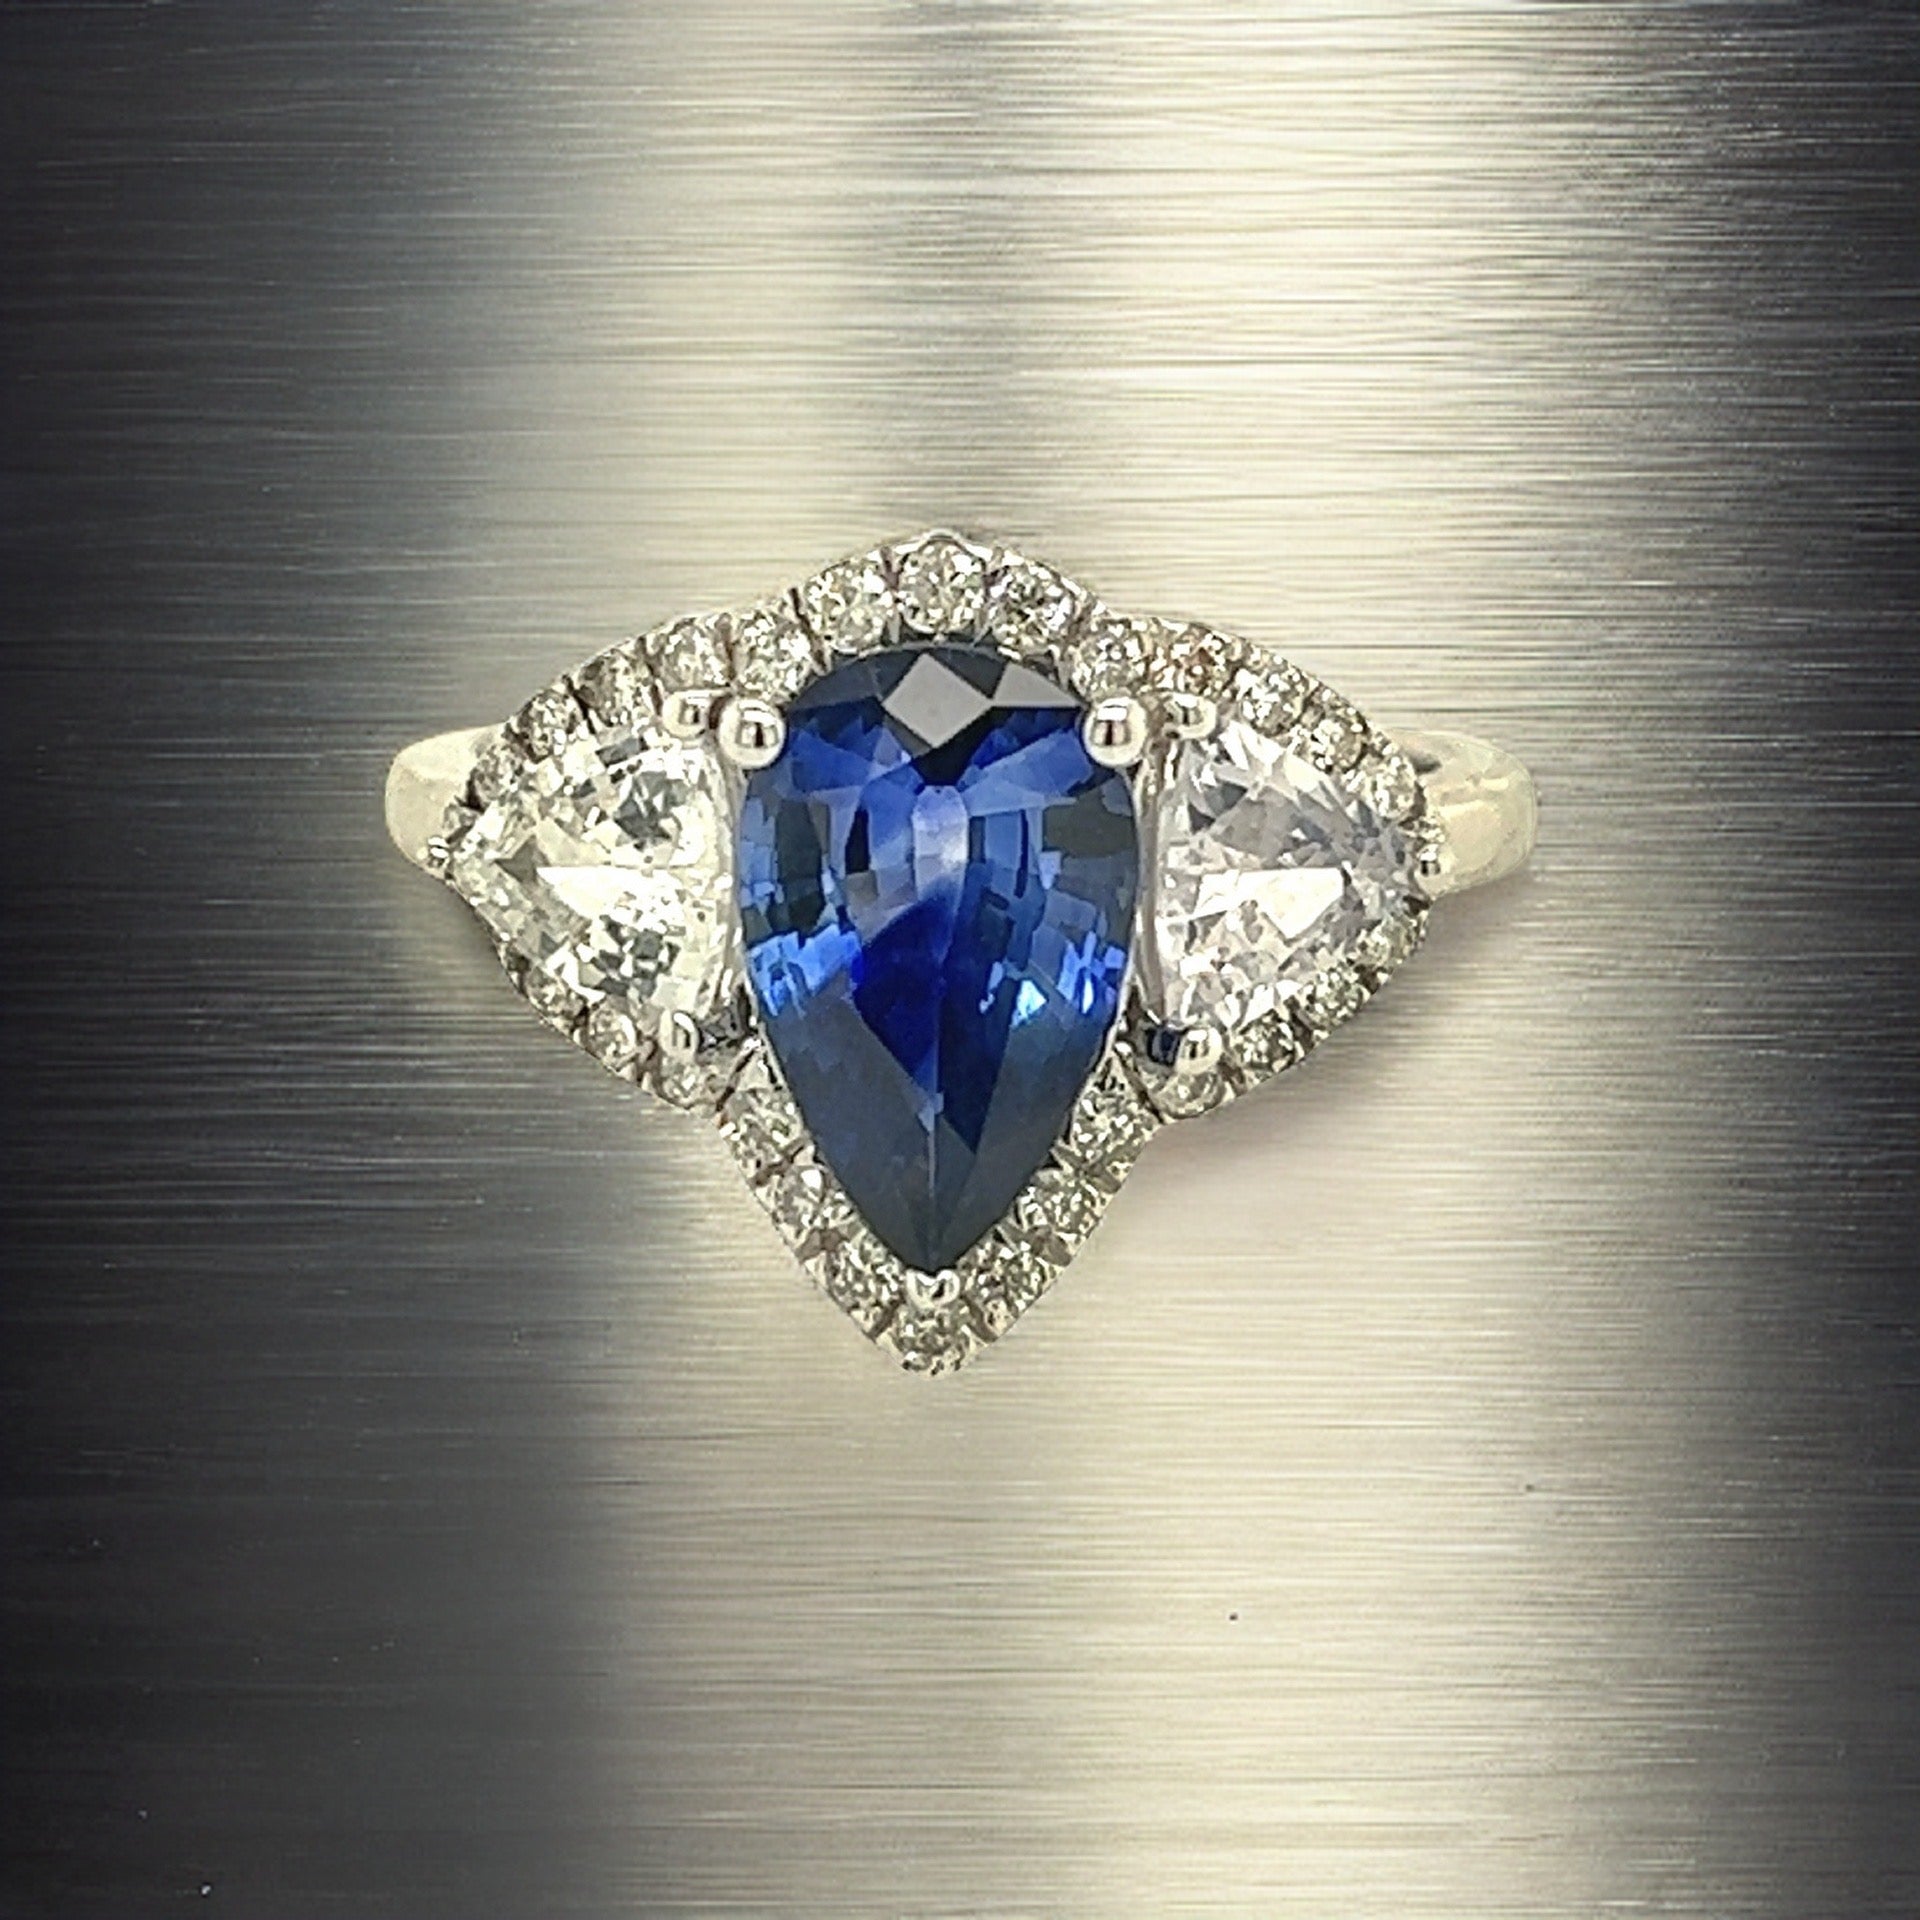 Natural Sapphire Diamond Ring Size 6.5 14k W Gold 2.78 TCW Certified $5,975 219221 - Certified Fine Jewelry